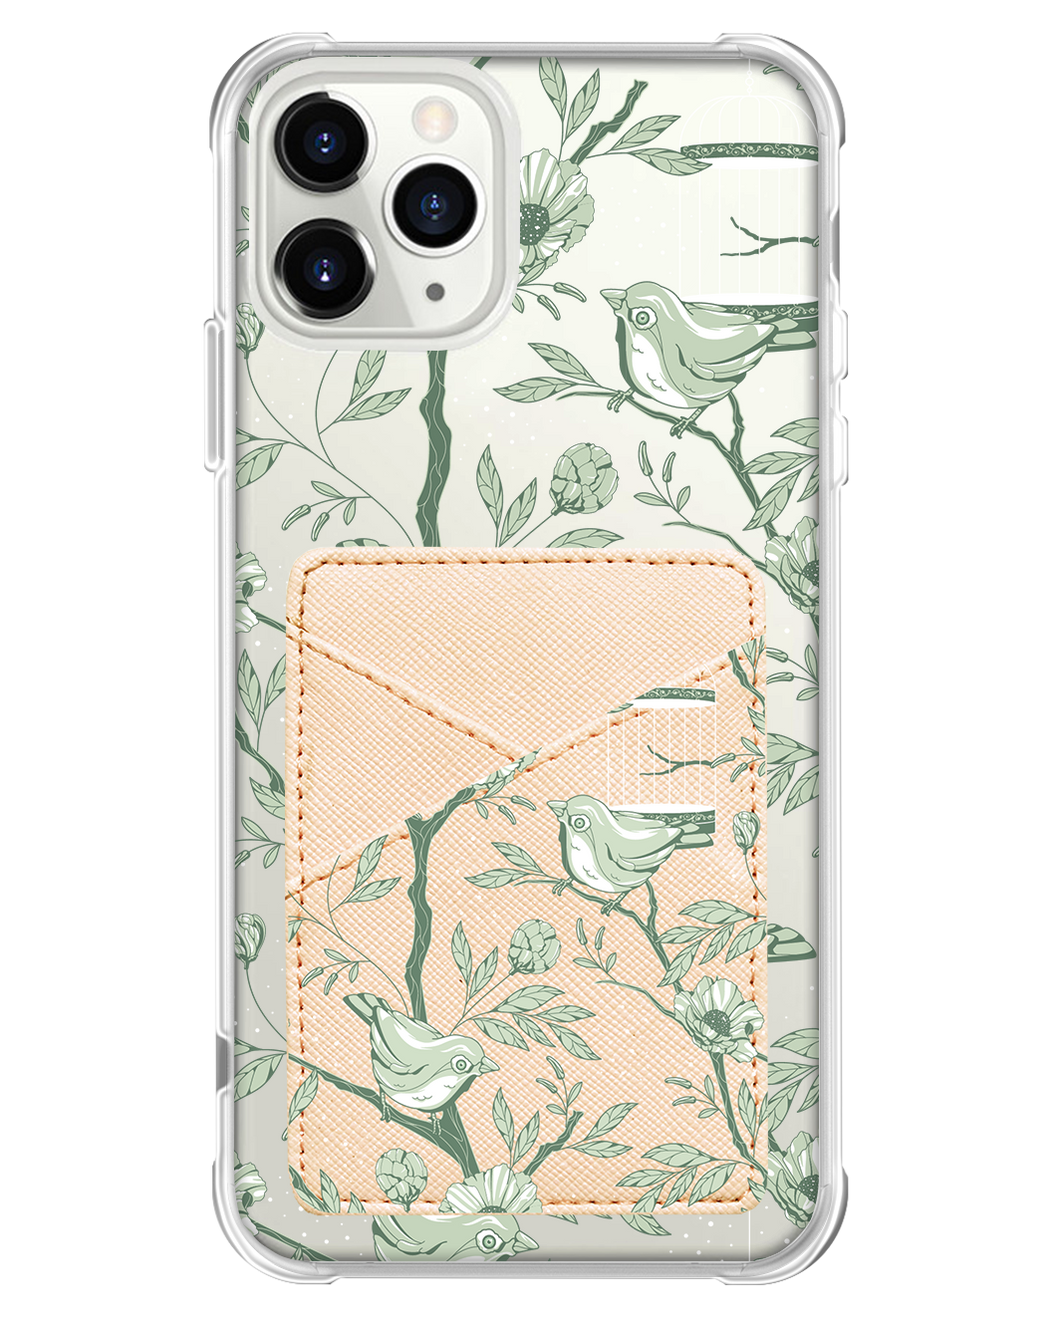 iPhone Phone Wallet Case - Lovebird Monochrome 4.0